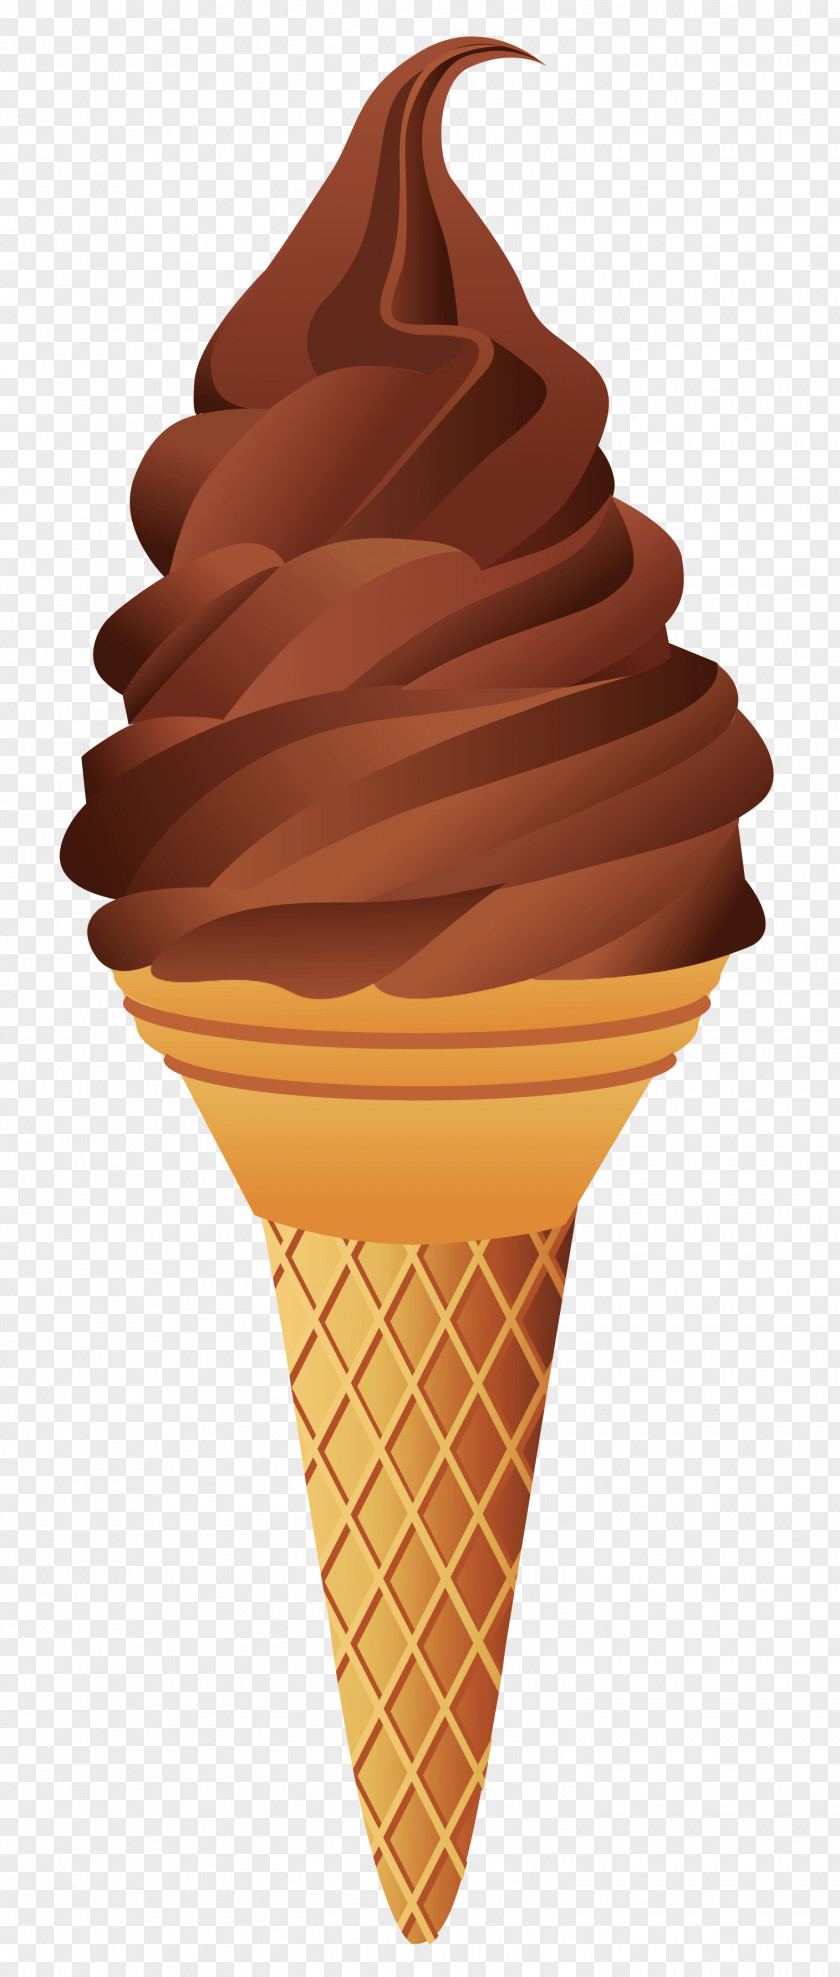 Cartoon Chocolate Cone Free Matting Strawberry Ice Cream Clip Art PNG